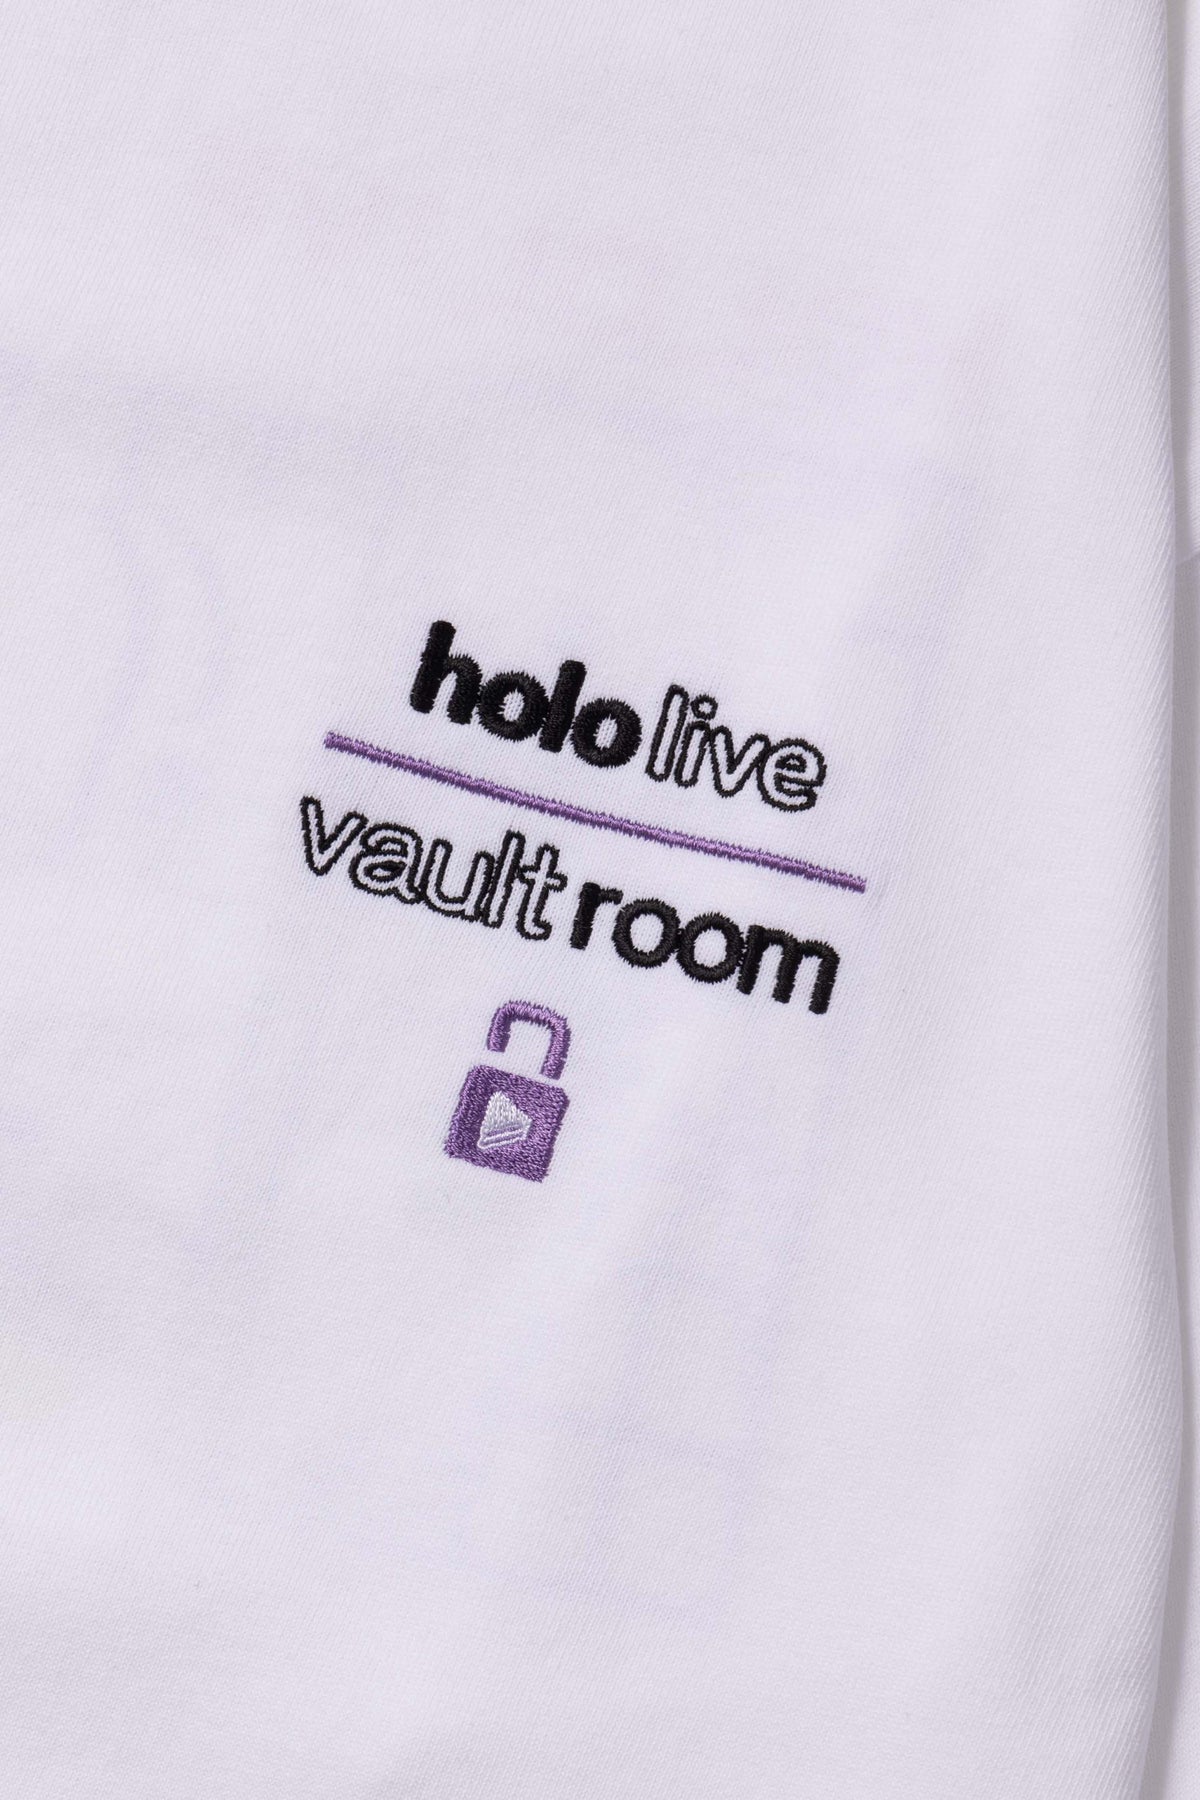 vaultroom TOKOYAMI TOWA TEE Lサイズ | hartwellspremium.com